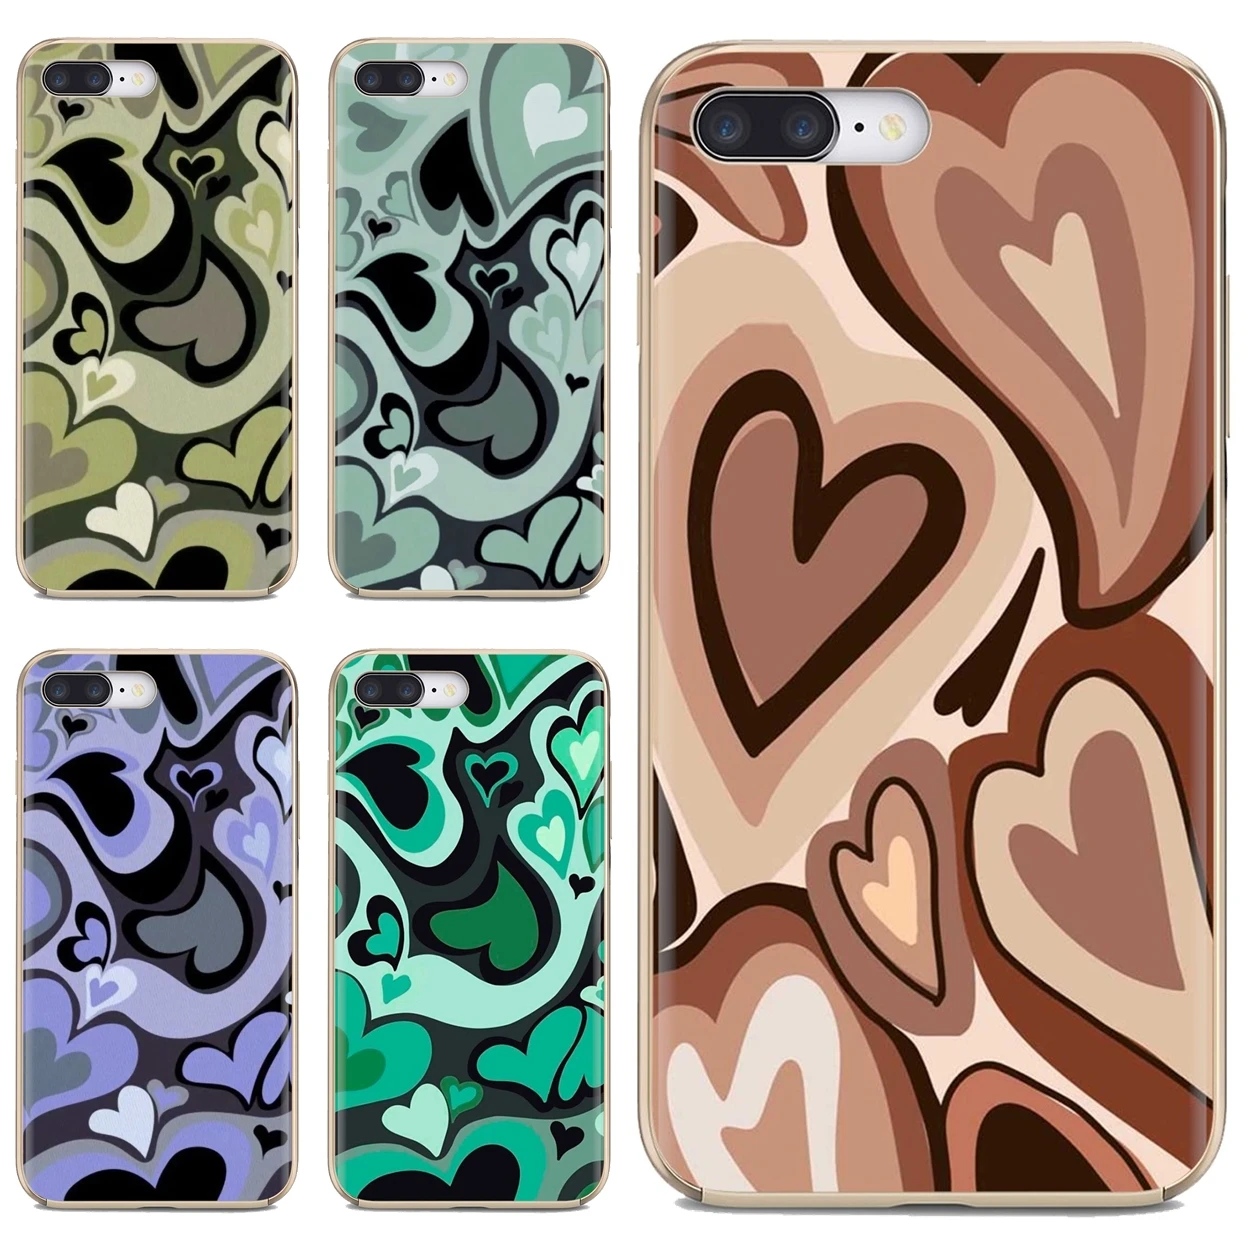 

Wildflower Pisces colour Heart For iPhone 10 11 12 13 Mini Pro 4S 5S SE 5C 6 6S 7 8 X XR XS Plus Max 2020 Soft Cover